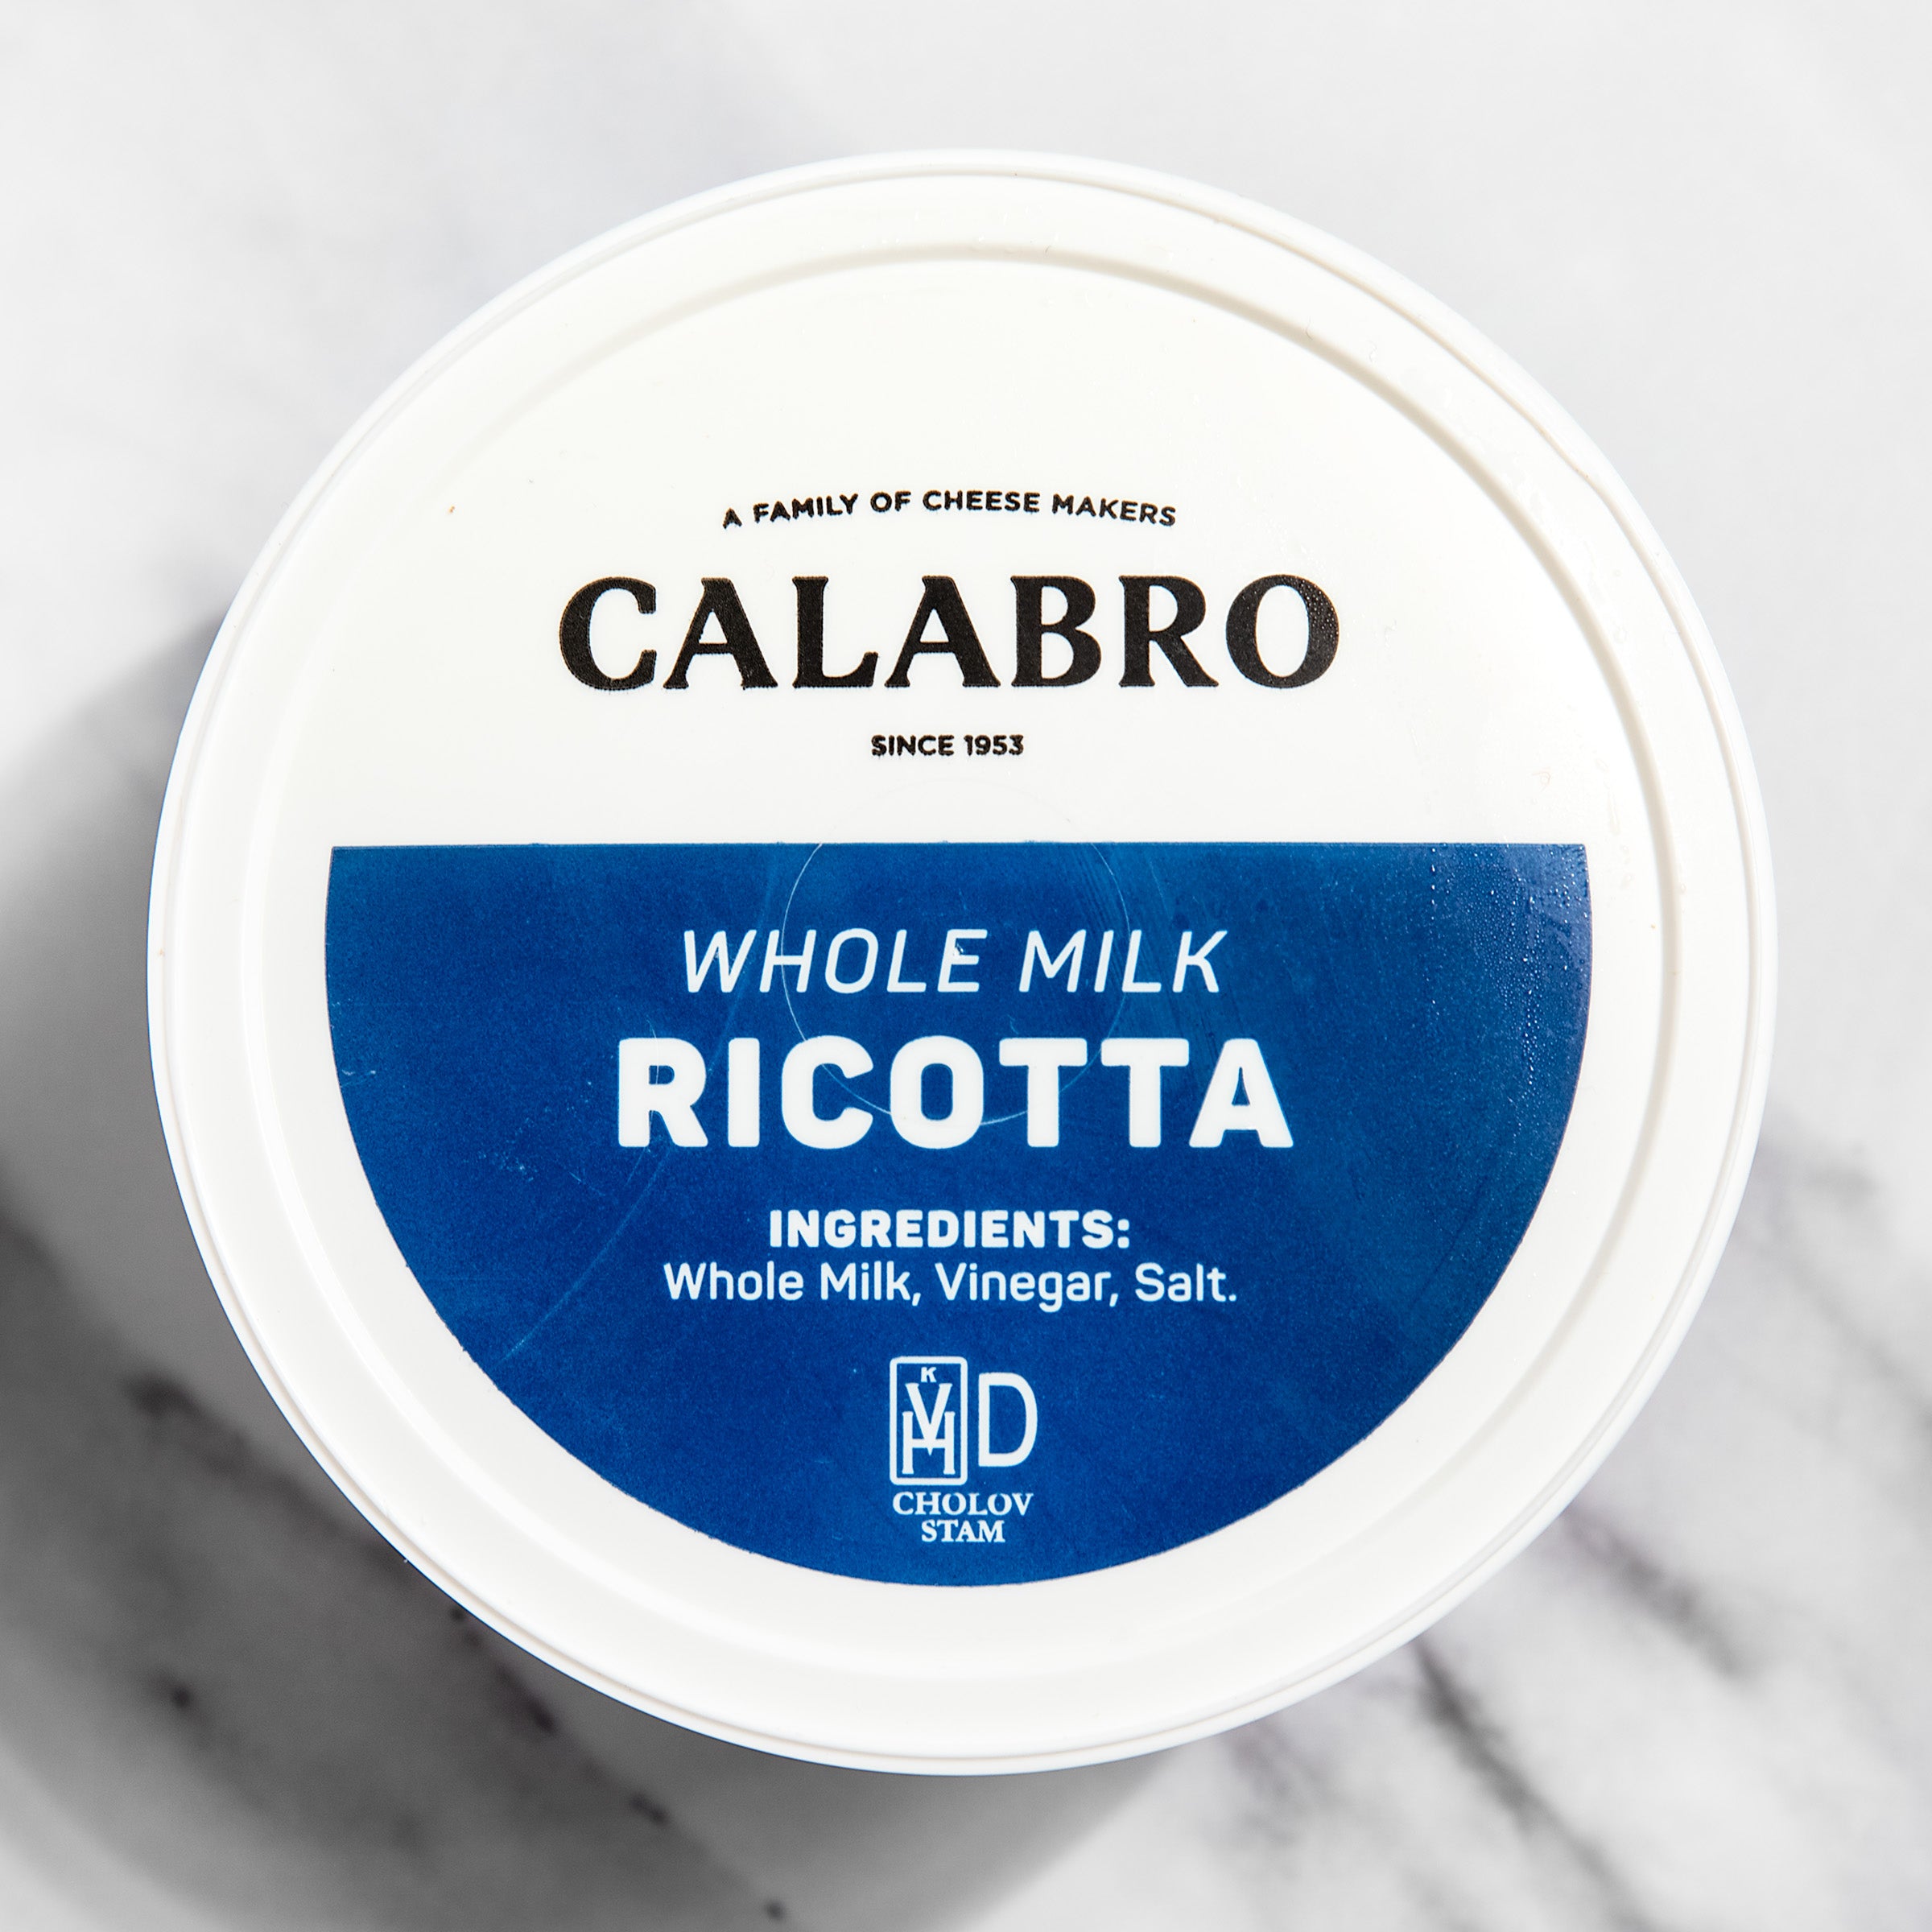 igourmet_5013_Whole Milk Ricotta Cheese_Calabro_Cheese